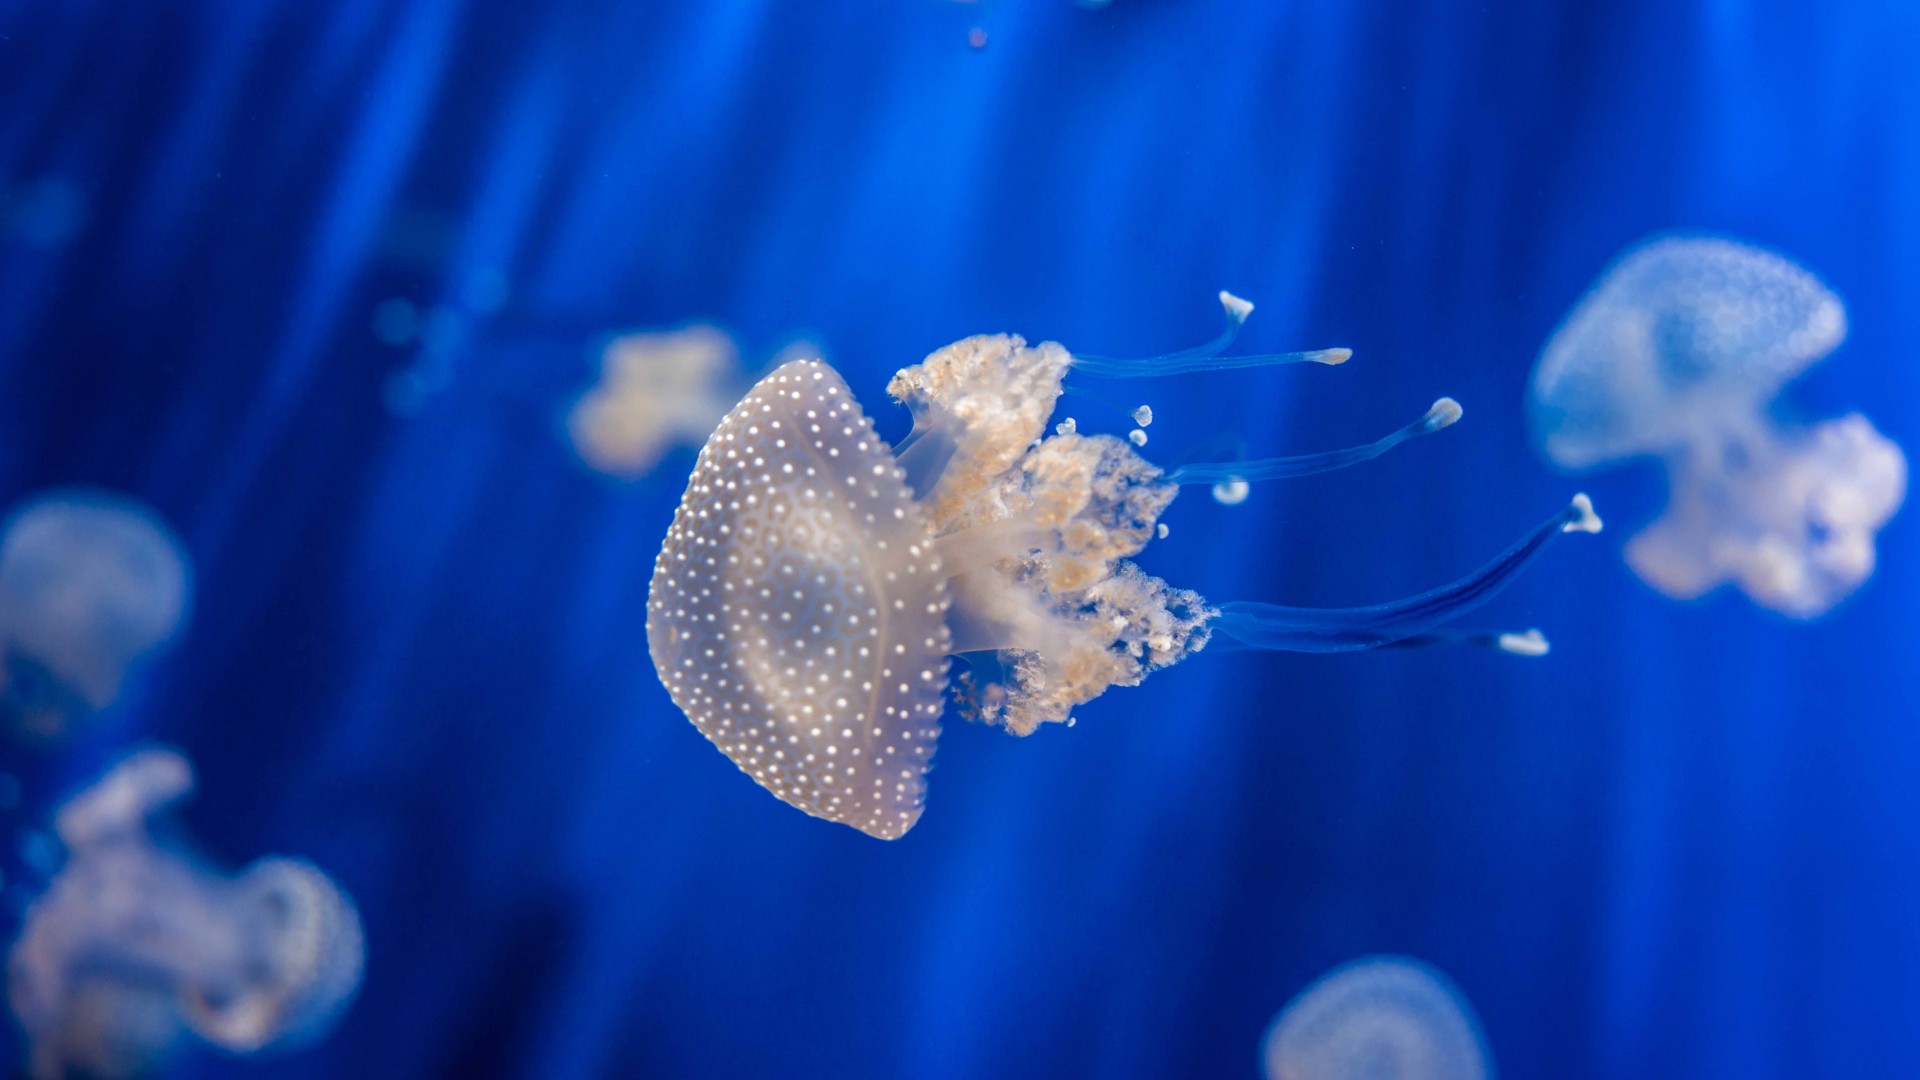 Sea Nettle, 4k, 5k wallpaper, 8k, Jellyfish, medusa, Genoa Aquarium, Italy, blue, water, underwater, aquarium, diving, tourism (horizontal)